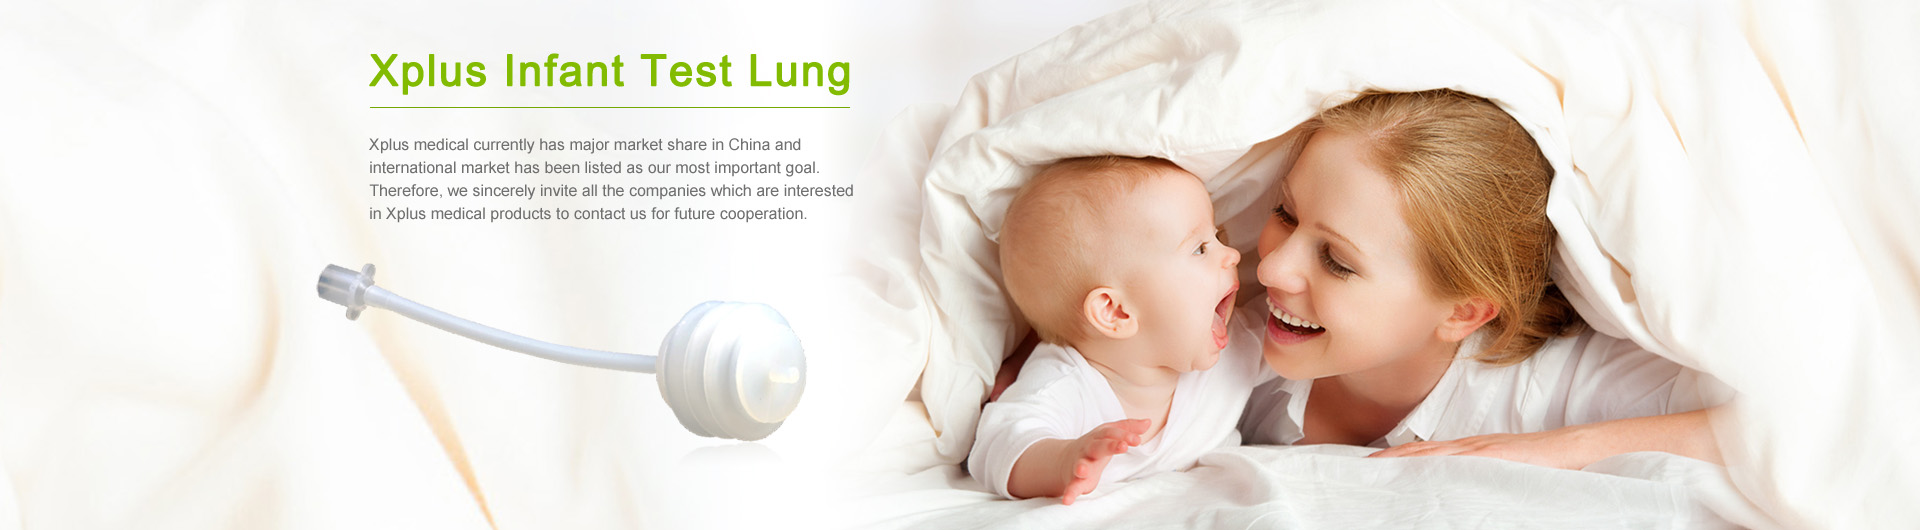 Test lung,Adjustable test lung, Breathing Reservoir Bag, Lung Function Tests